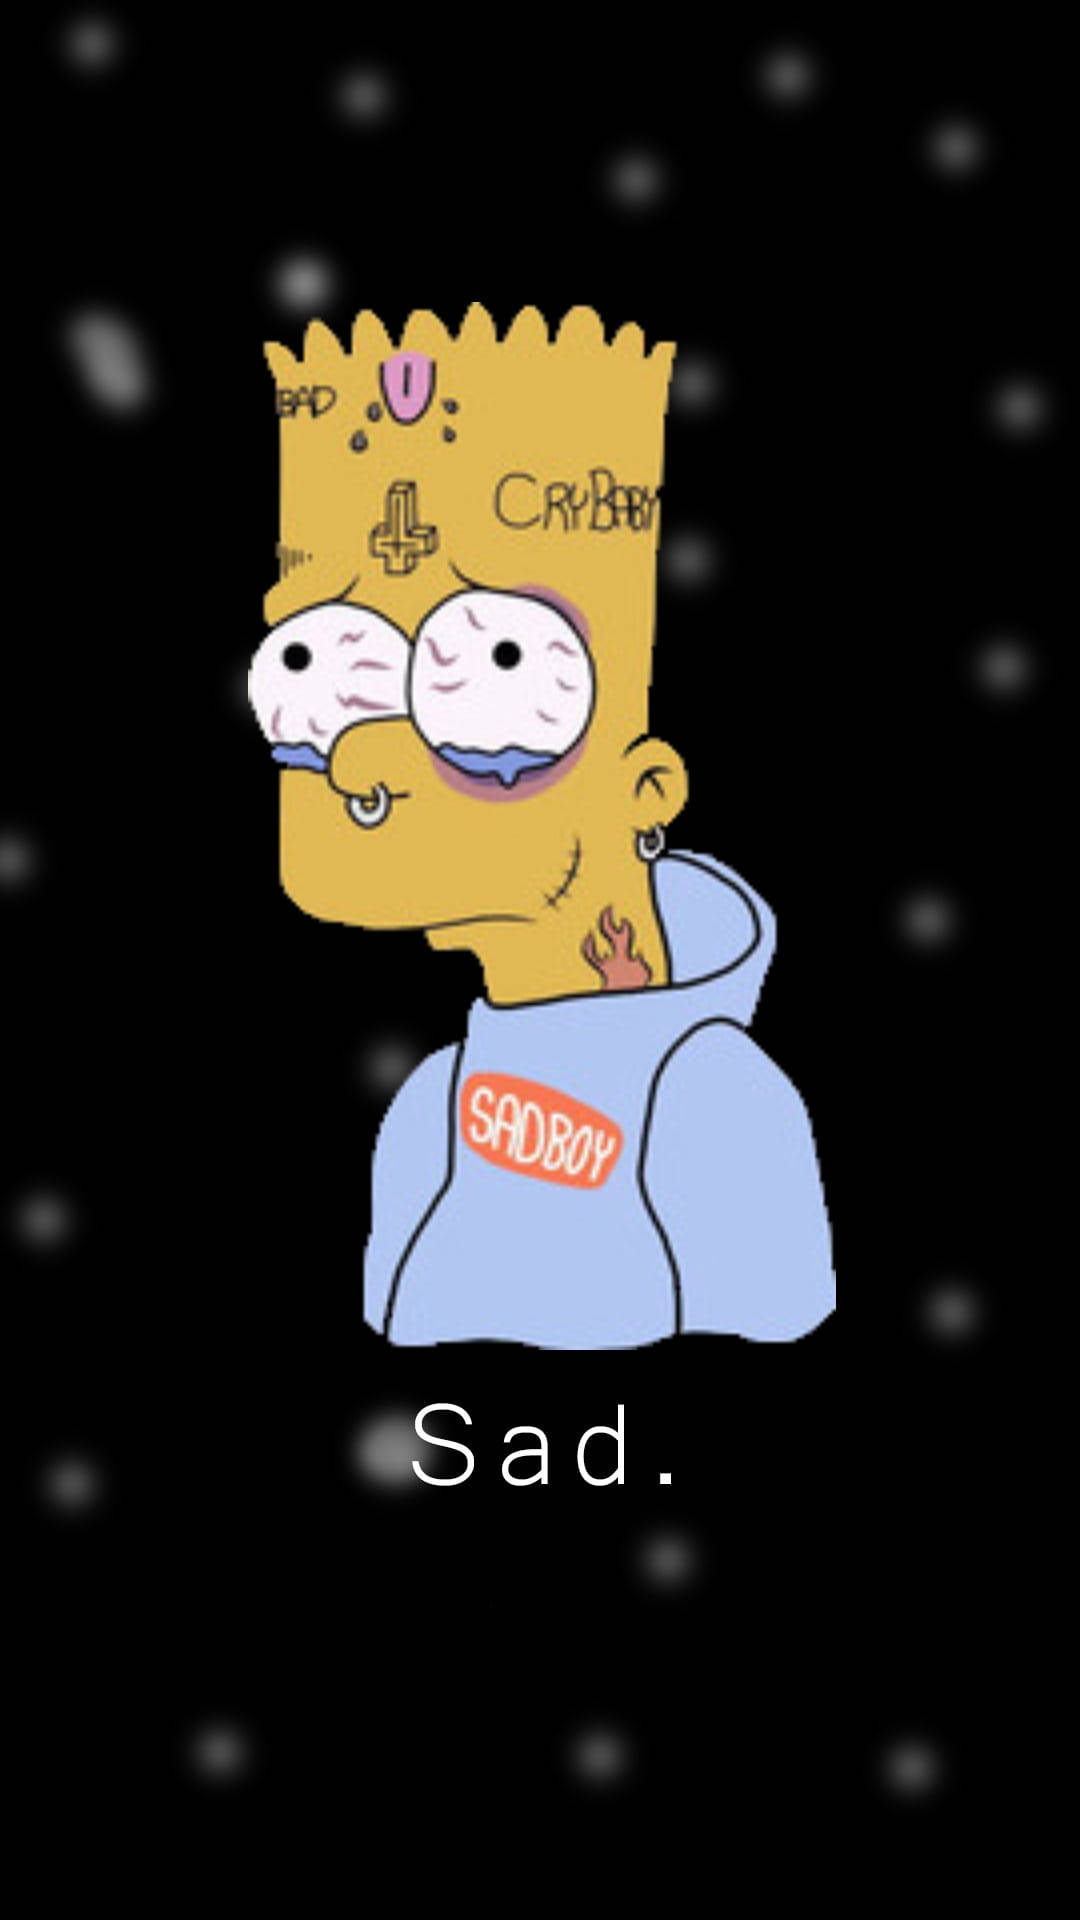 Sad Simpsons Sadboy Sweater